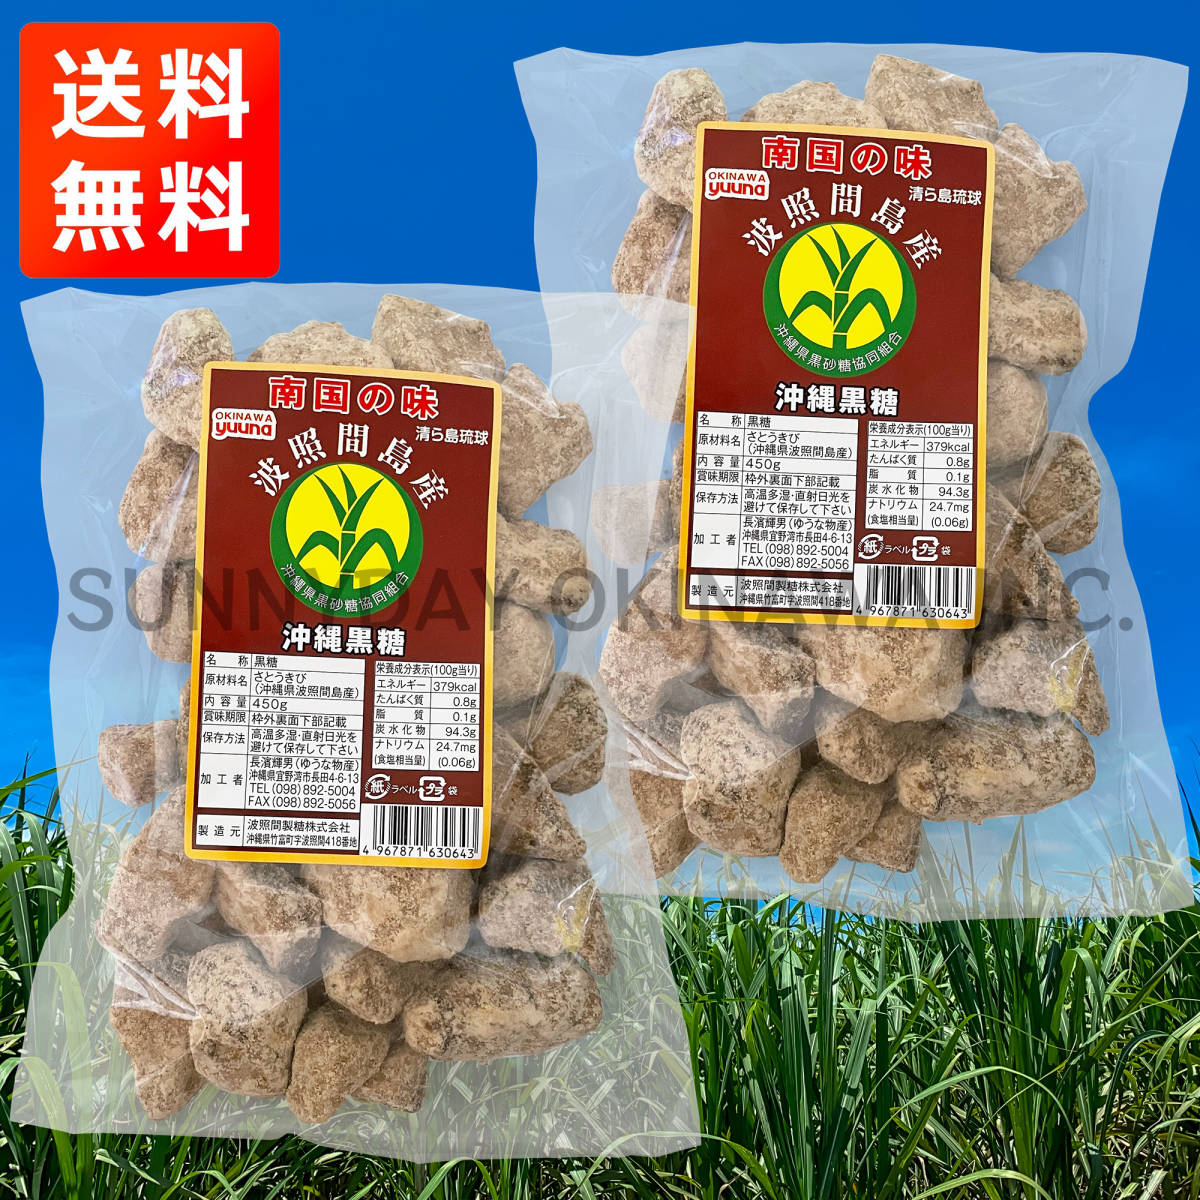  волна . промежуток остров производство kachiwali коричневый сахар 450g 2 пакет Okinawa префектура производство оригинальный коричневый сахар блок . земля производство ваш заказ 